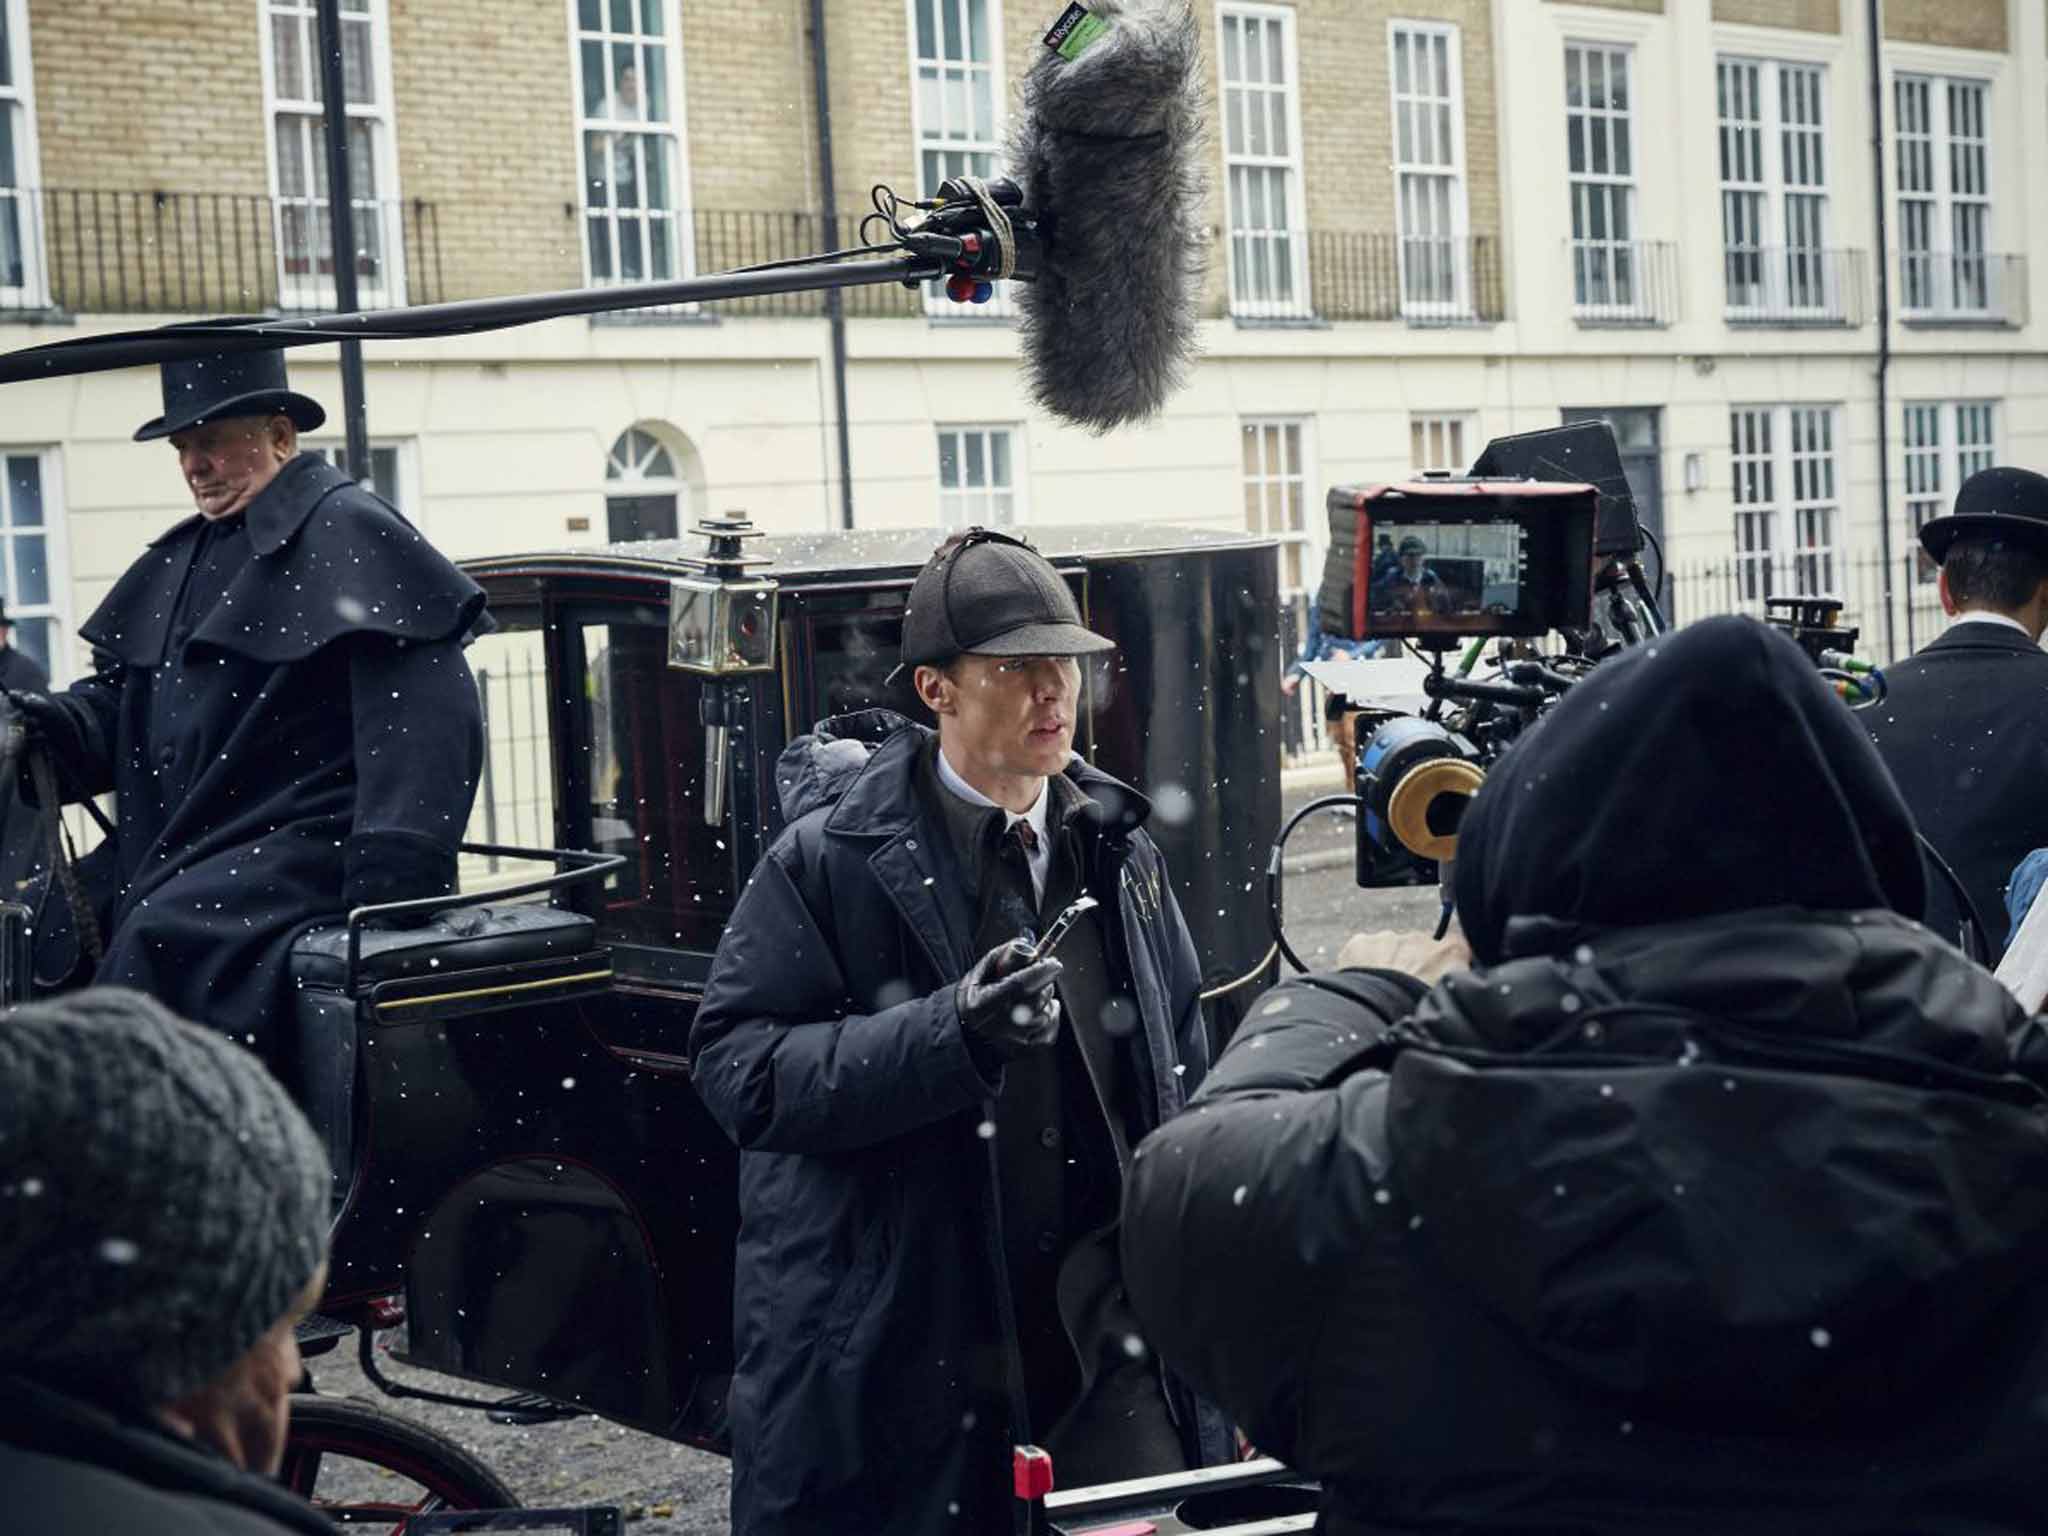 On set with Sherlock